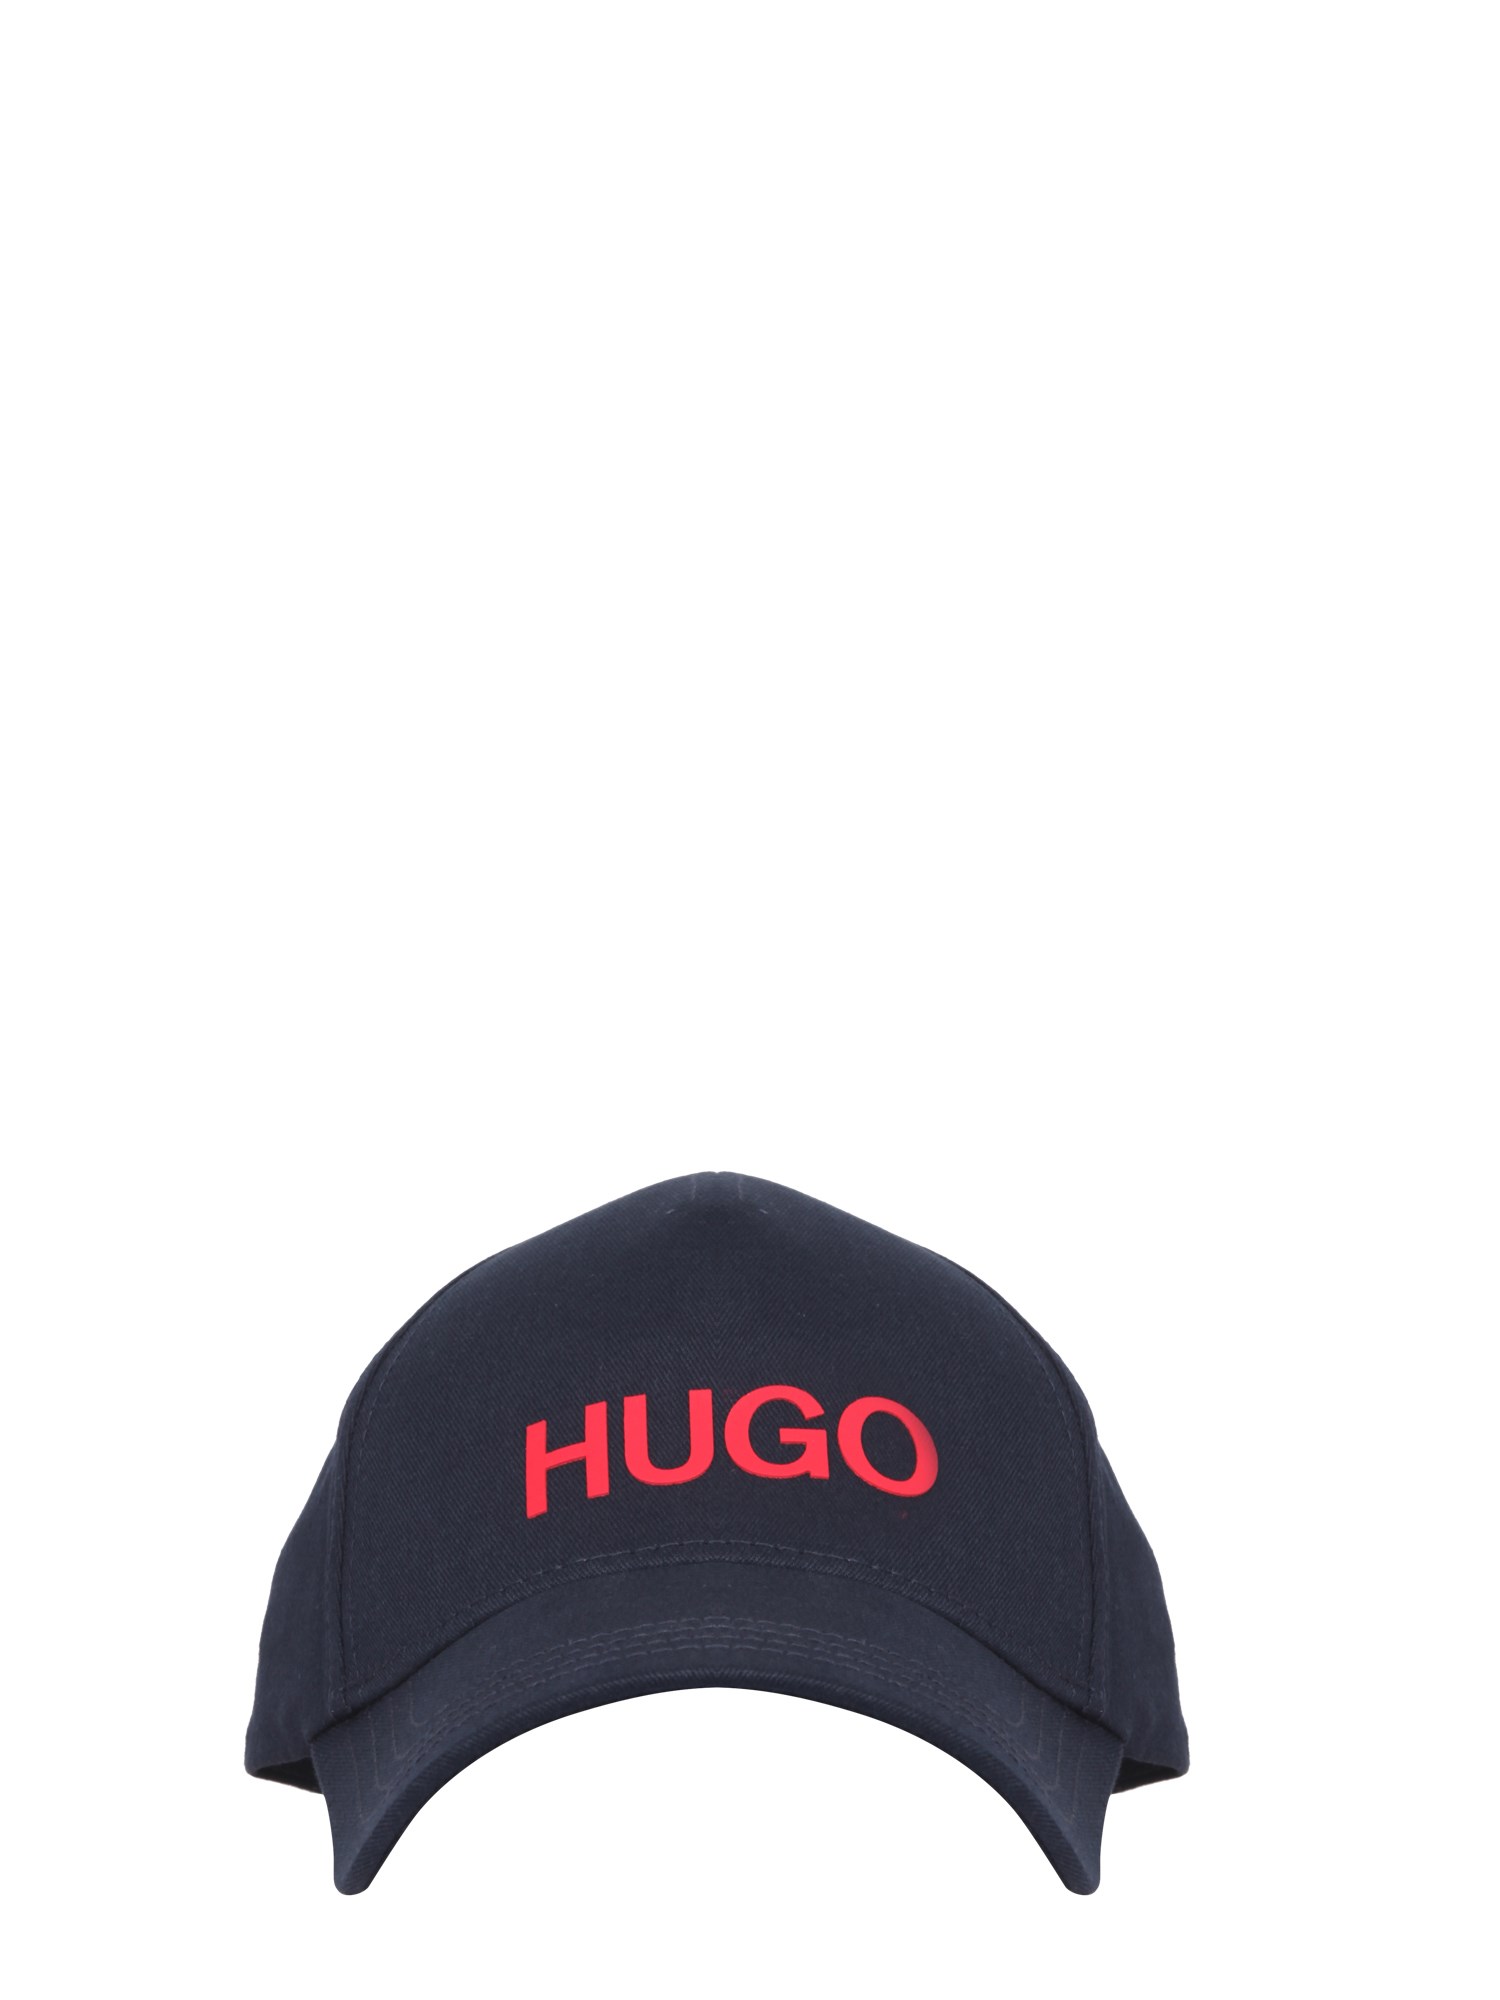 hugo hat with logo